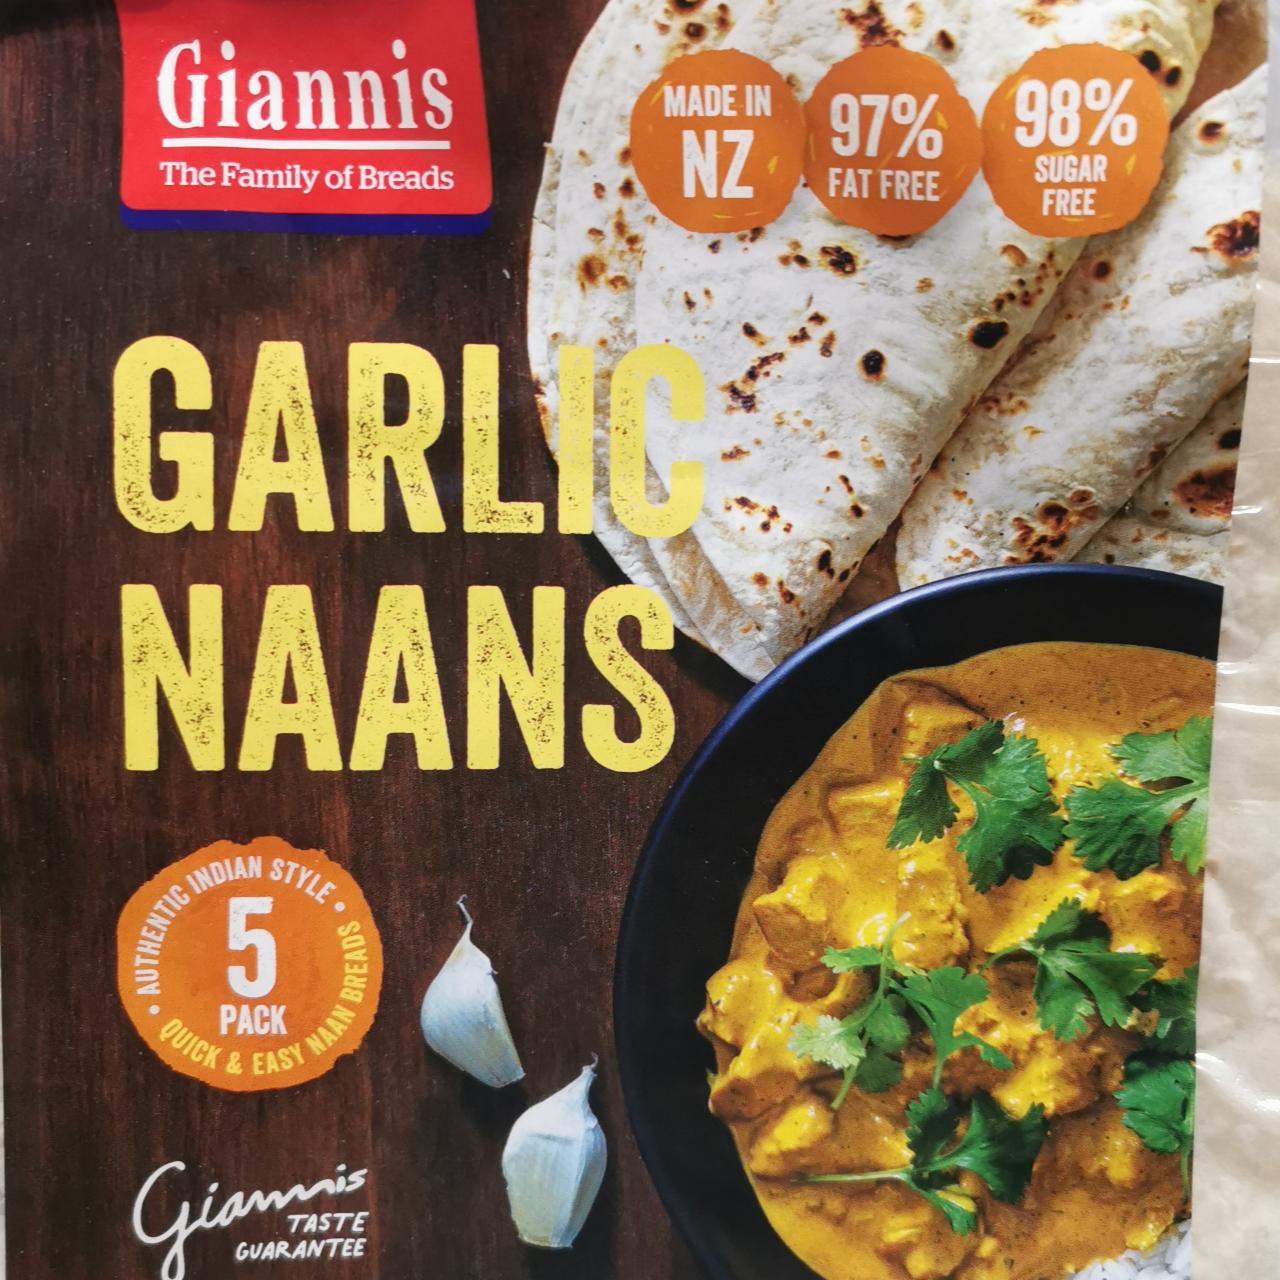 Fotografie - Garlic naans Gianni's